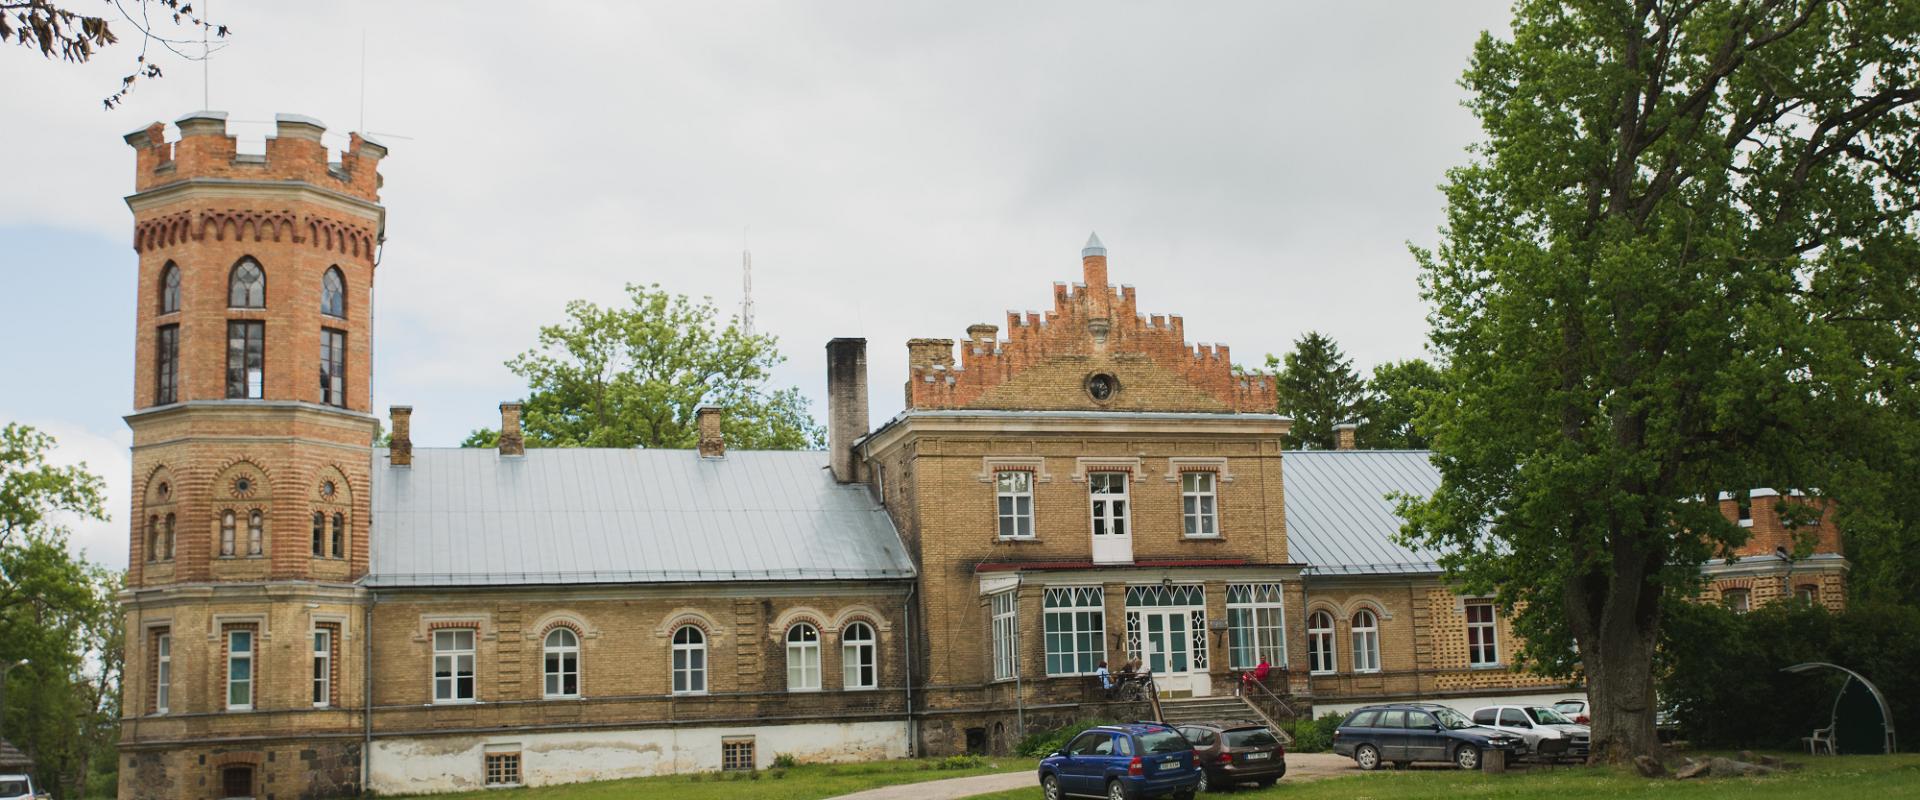 Lustivere Manor